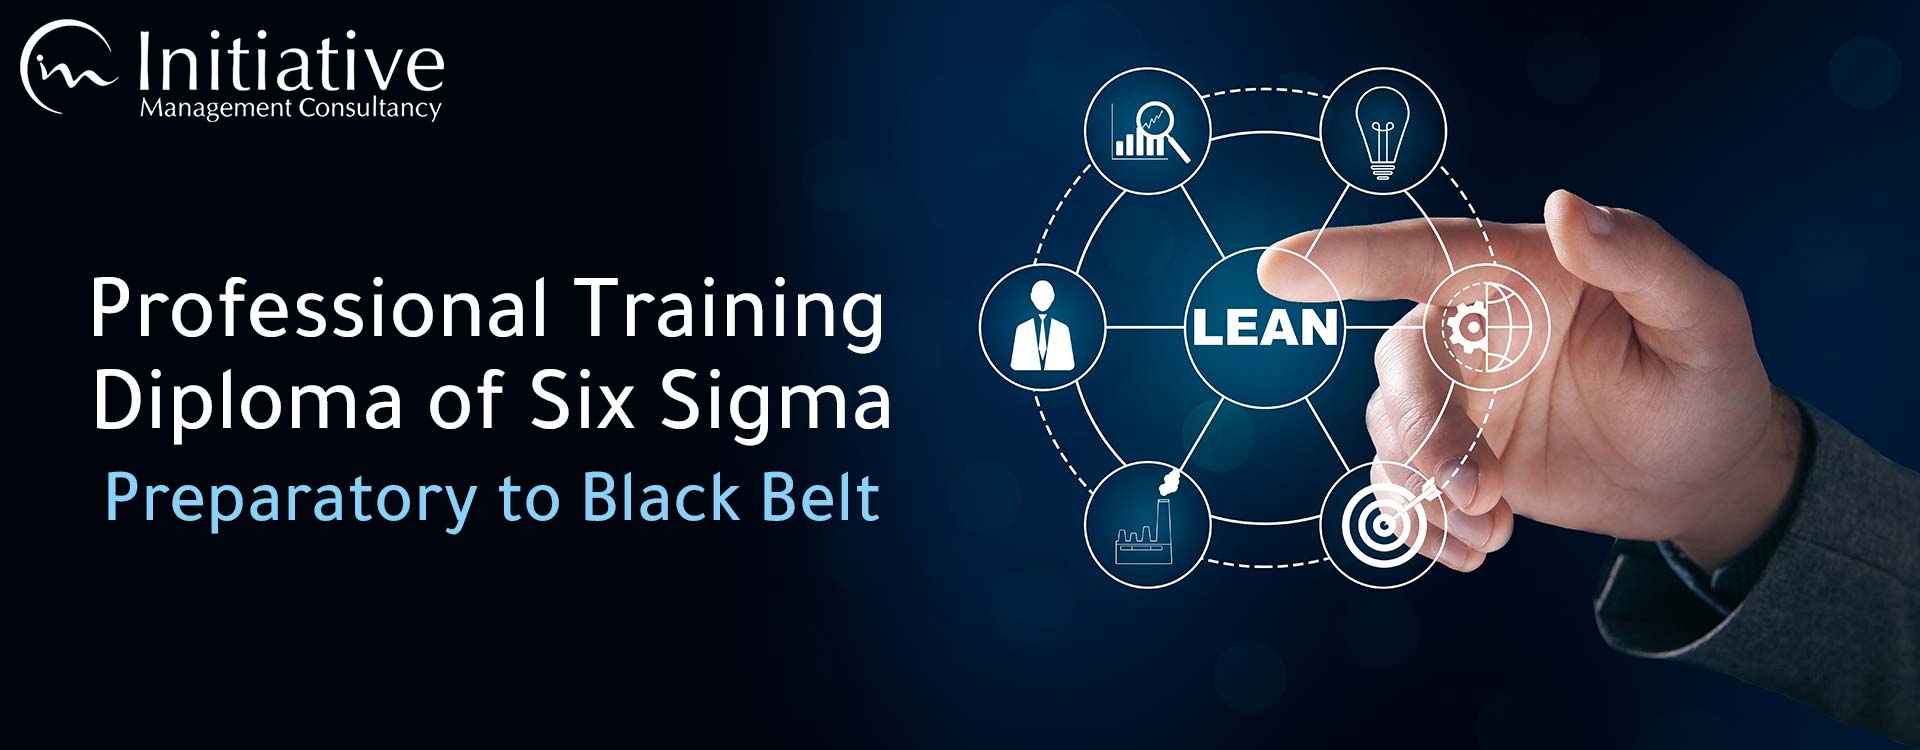 Professional Training Diploma of Six Sigma Prep. to Black Belt